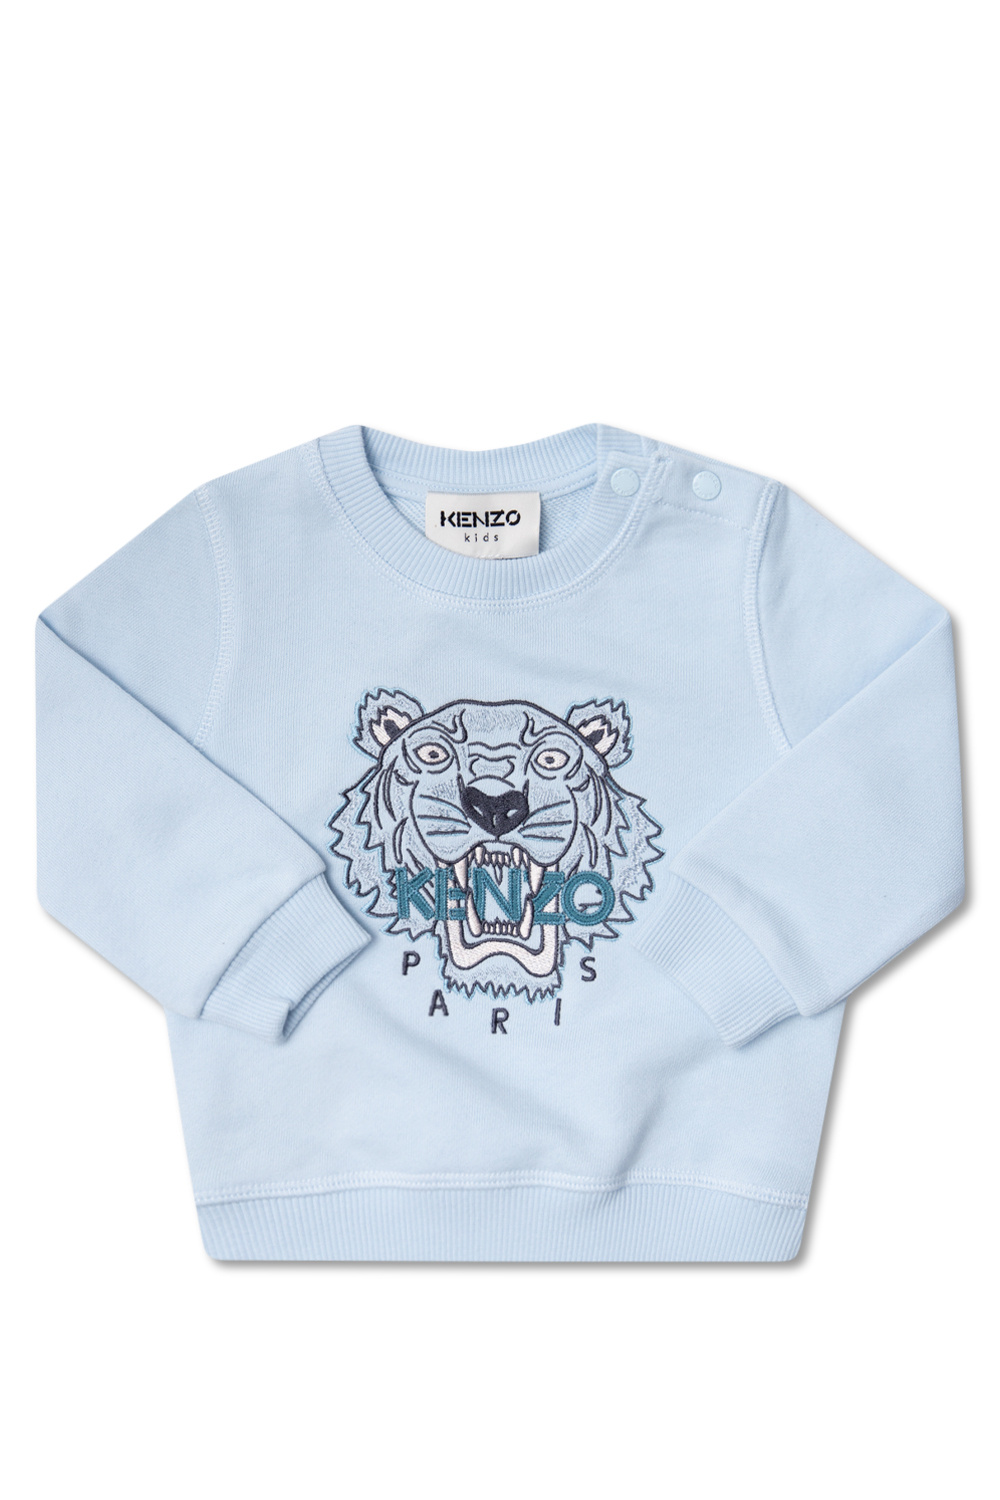 Kenzo Kids Joma Smash Kurzärmeliges T-shirt